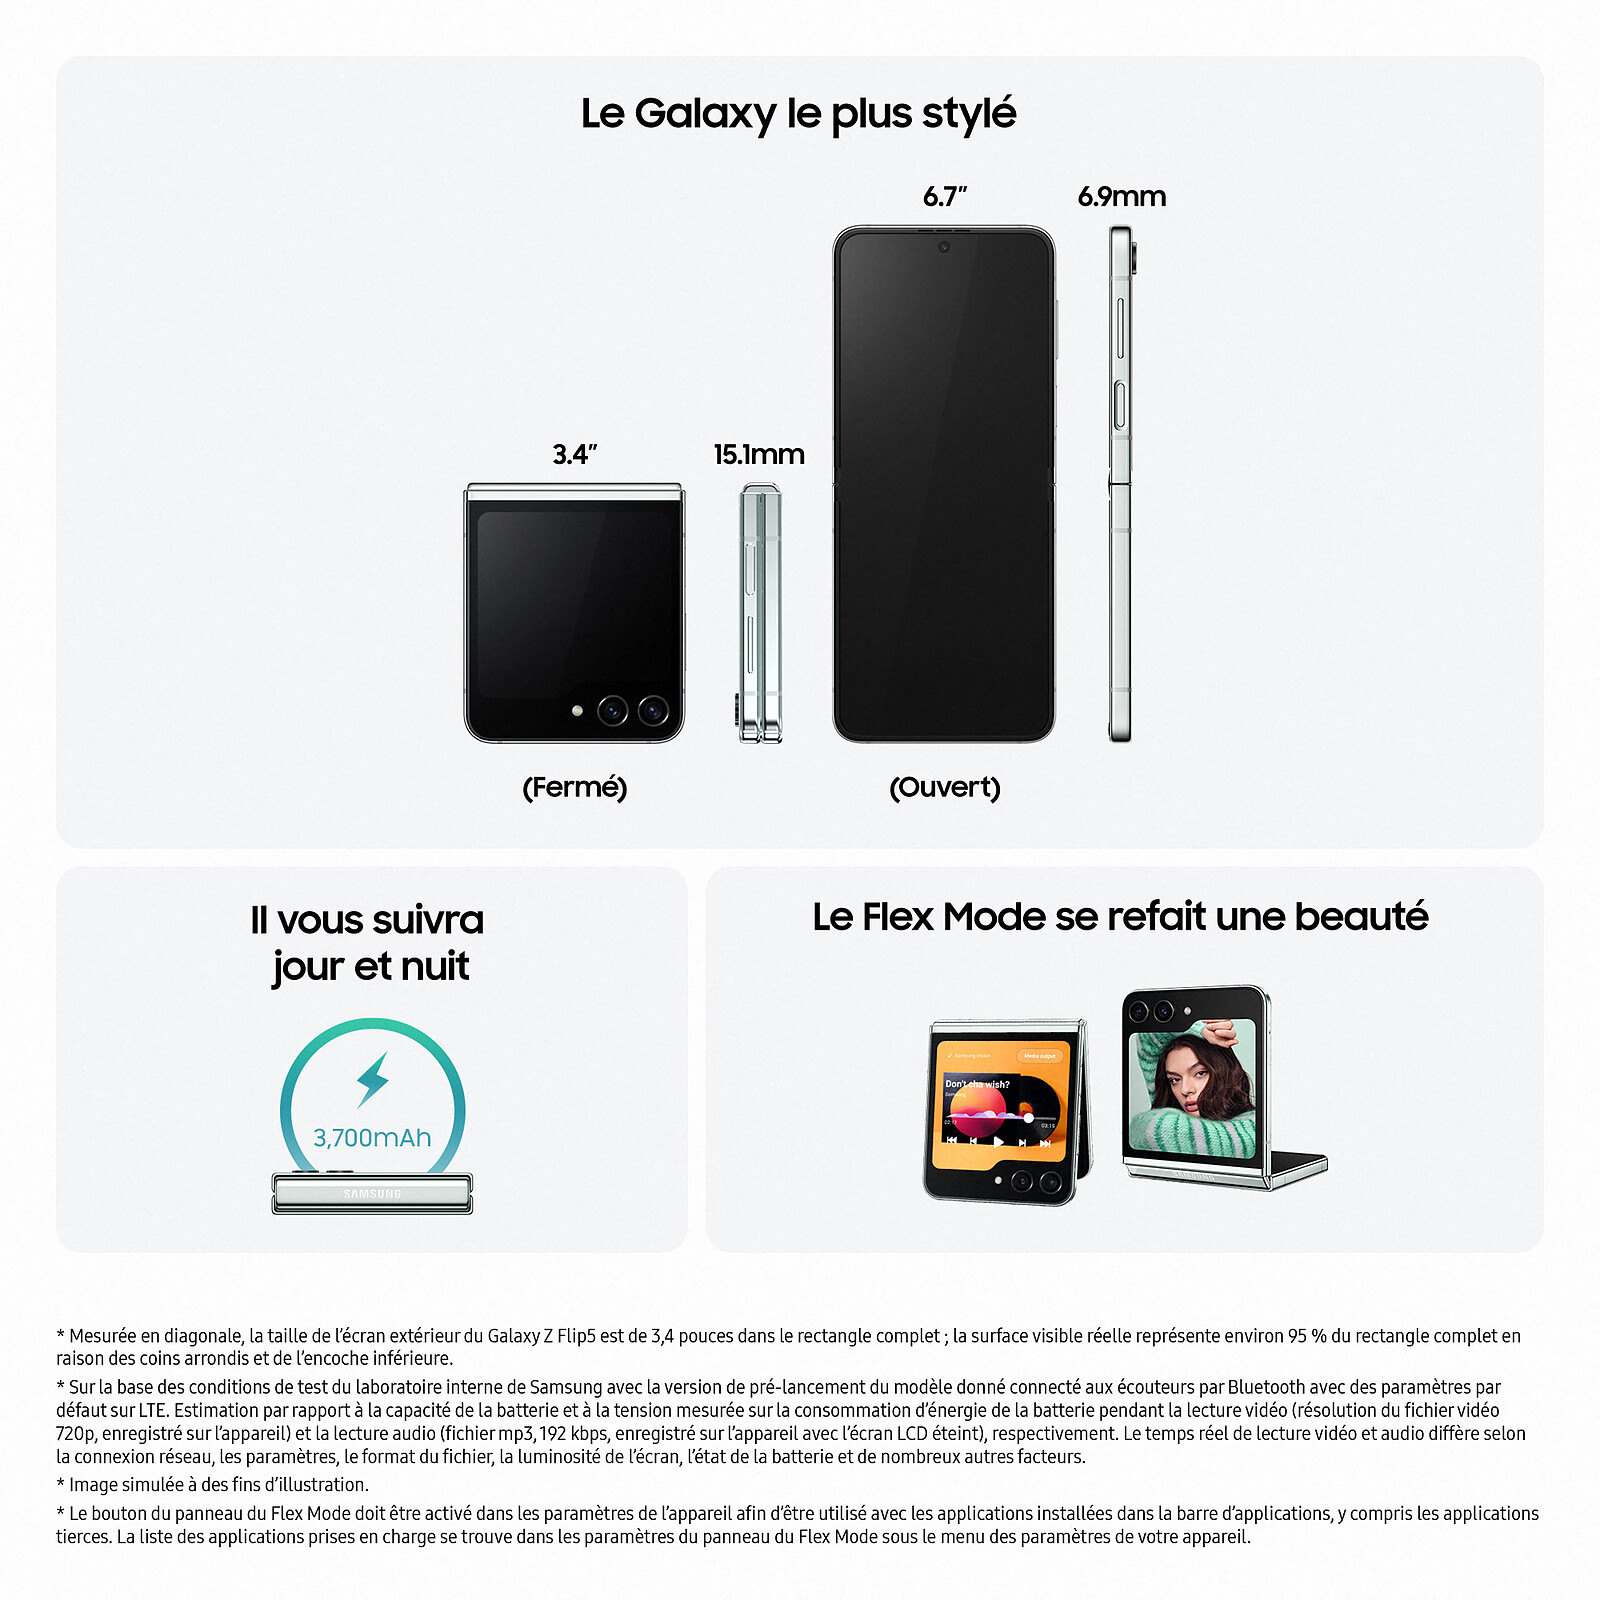 Apple iPhone 15 Plus 256 GB Negro - Móvil y smartphone - LDLC